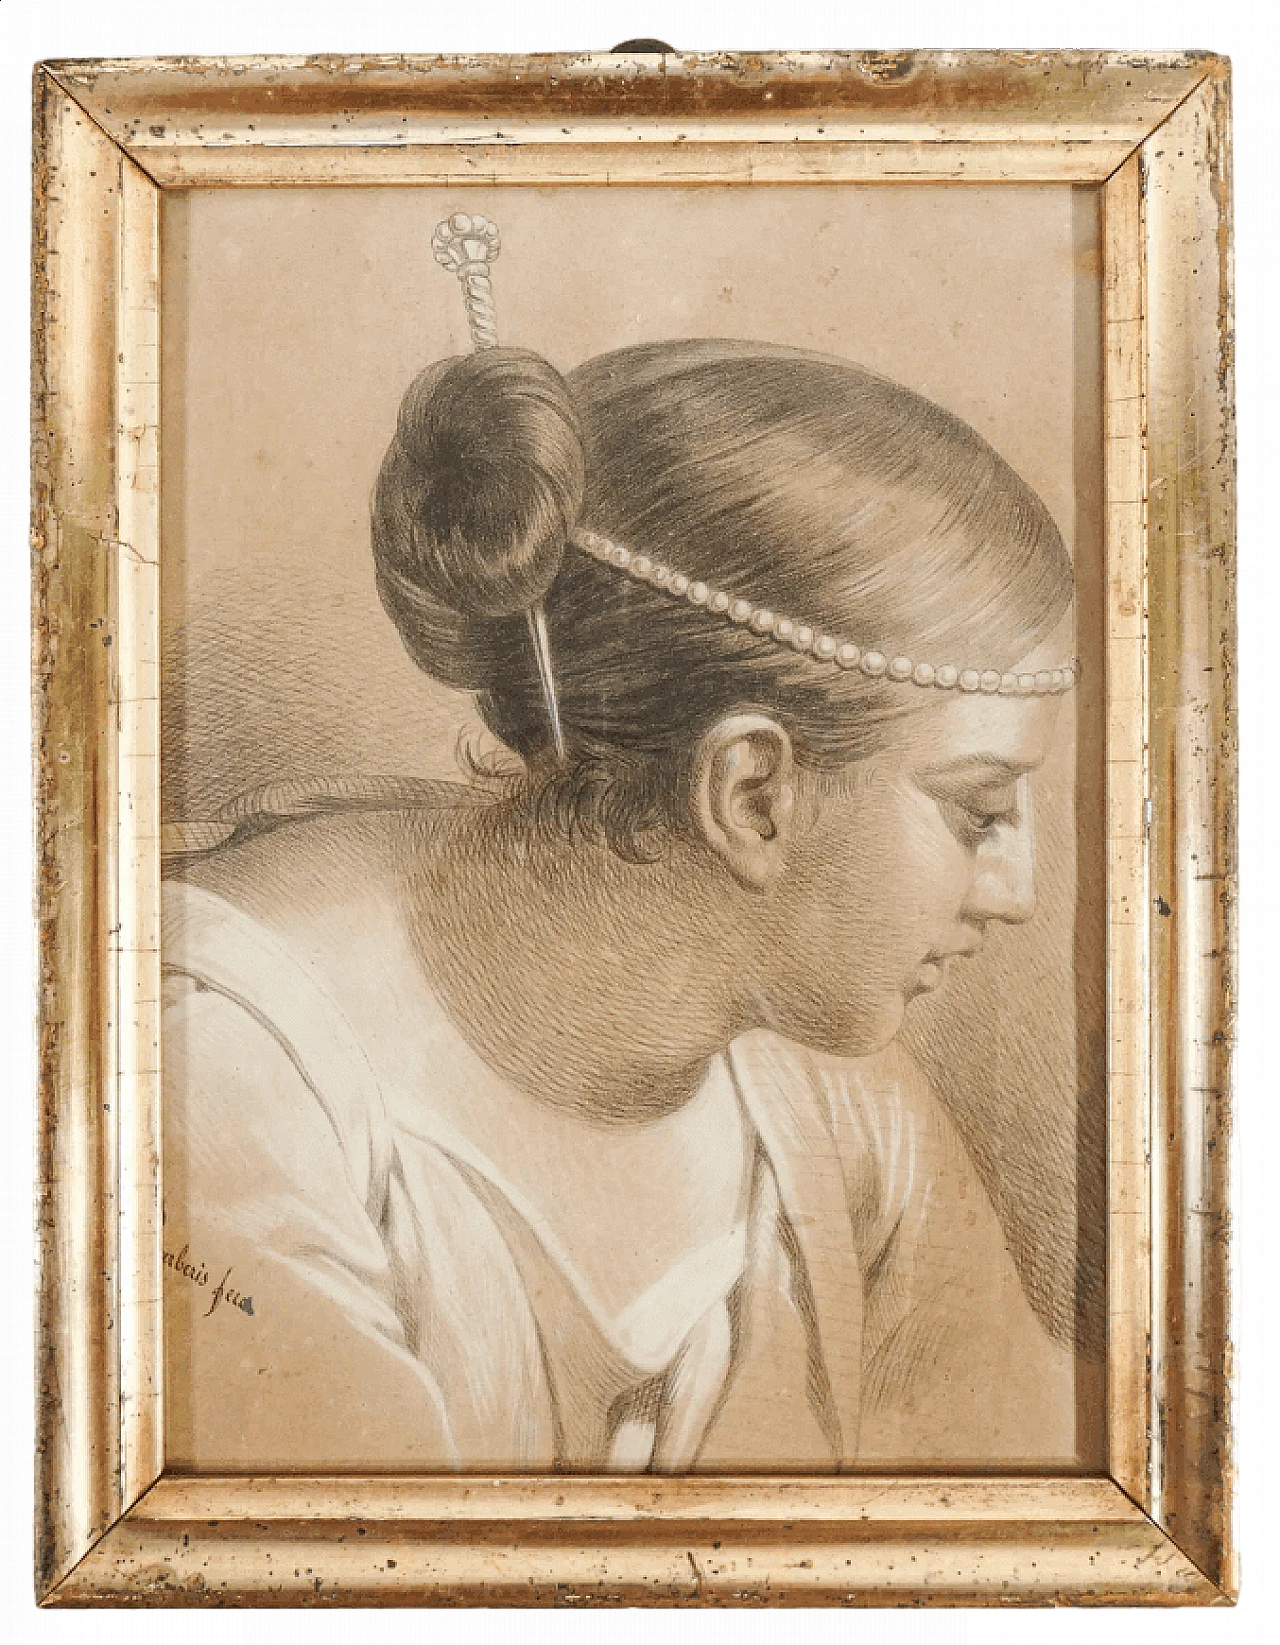 Antonio Barberis, Portrait of a Woman, pencil on paper, 19th century 9